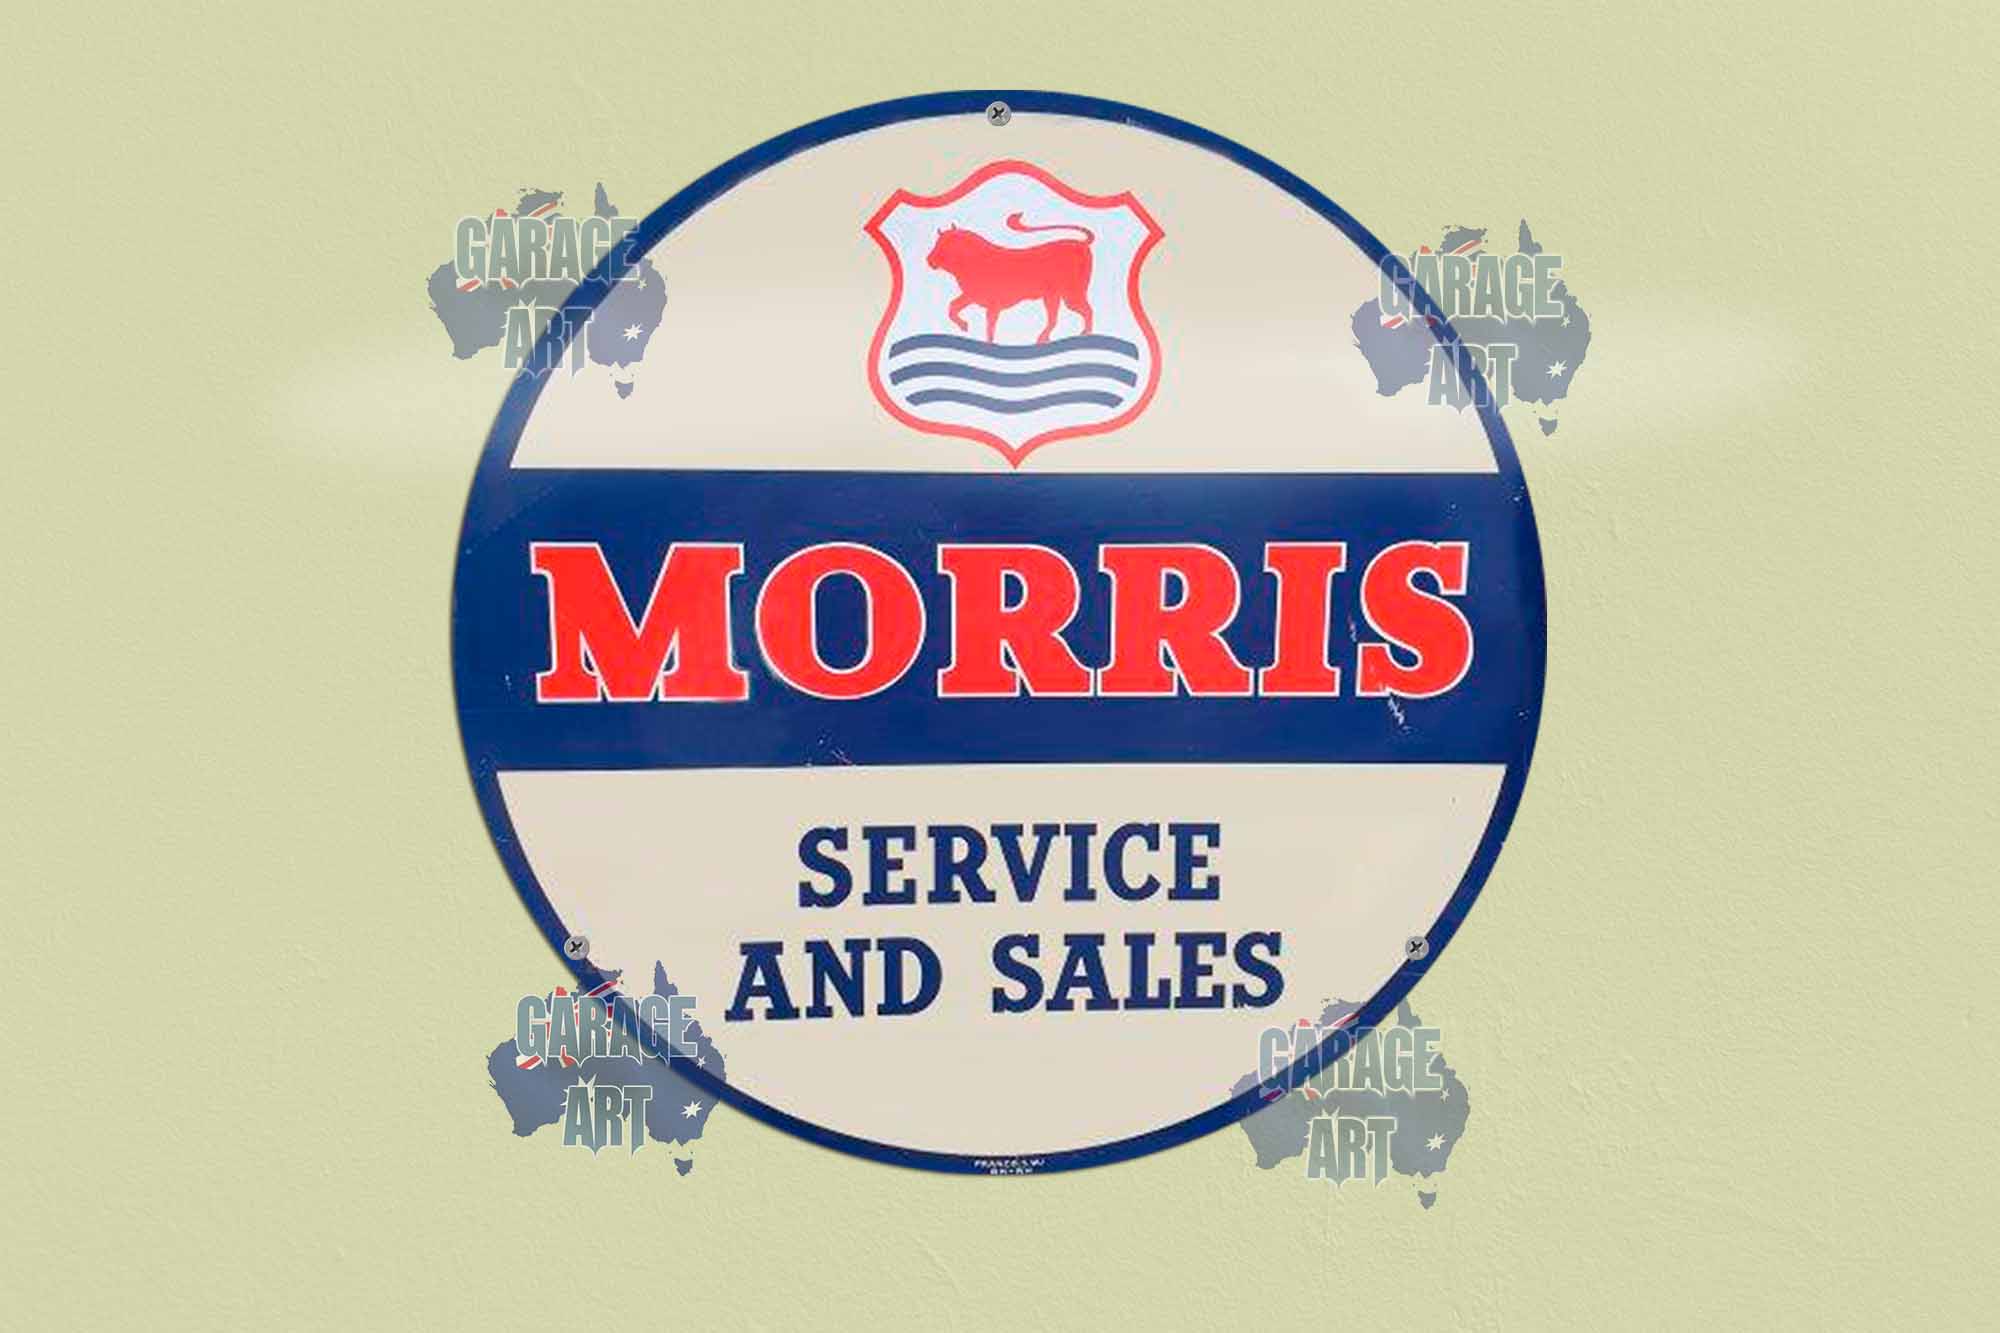 Morris Sales Service 355mmDia Tin Sign freeshipping - garageartaustralia